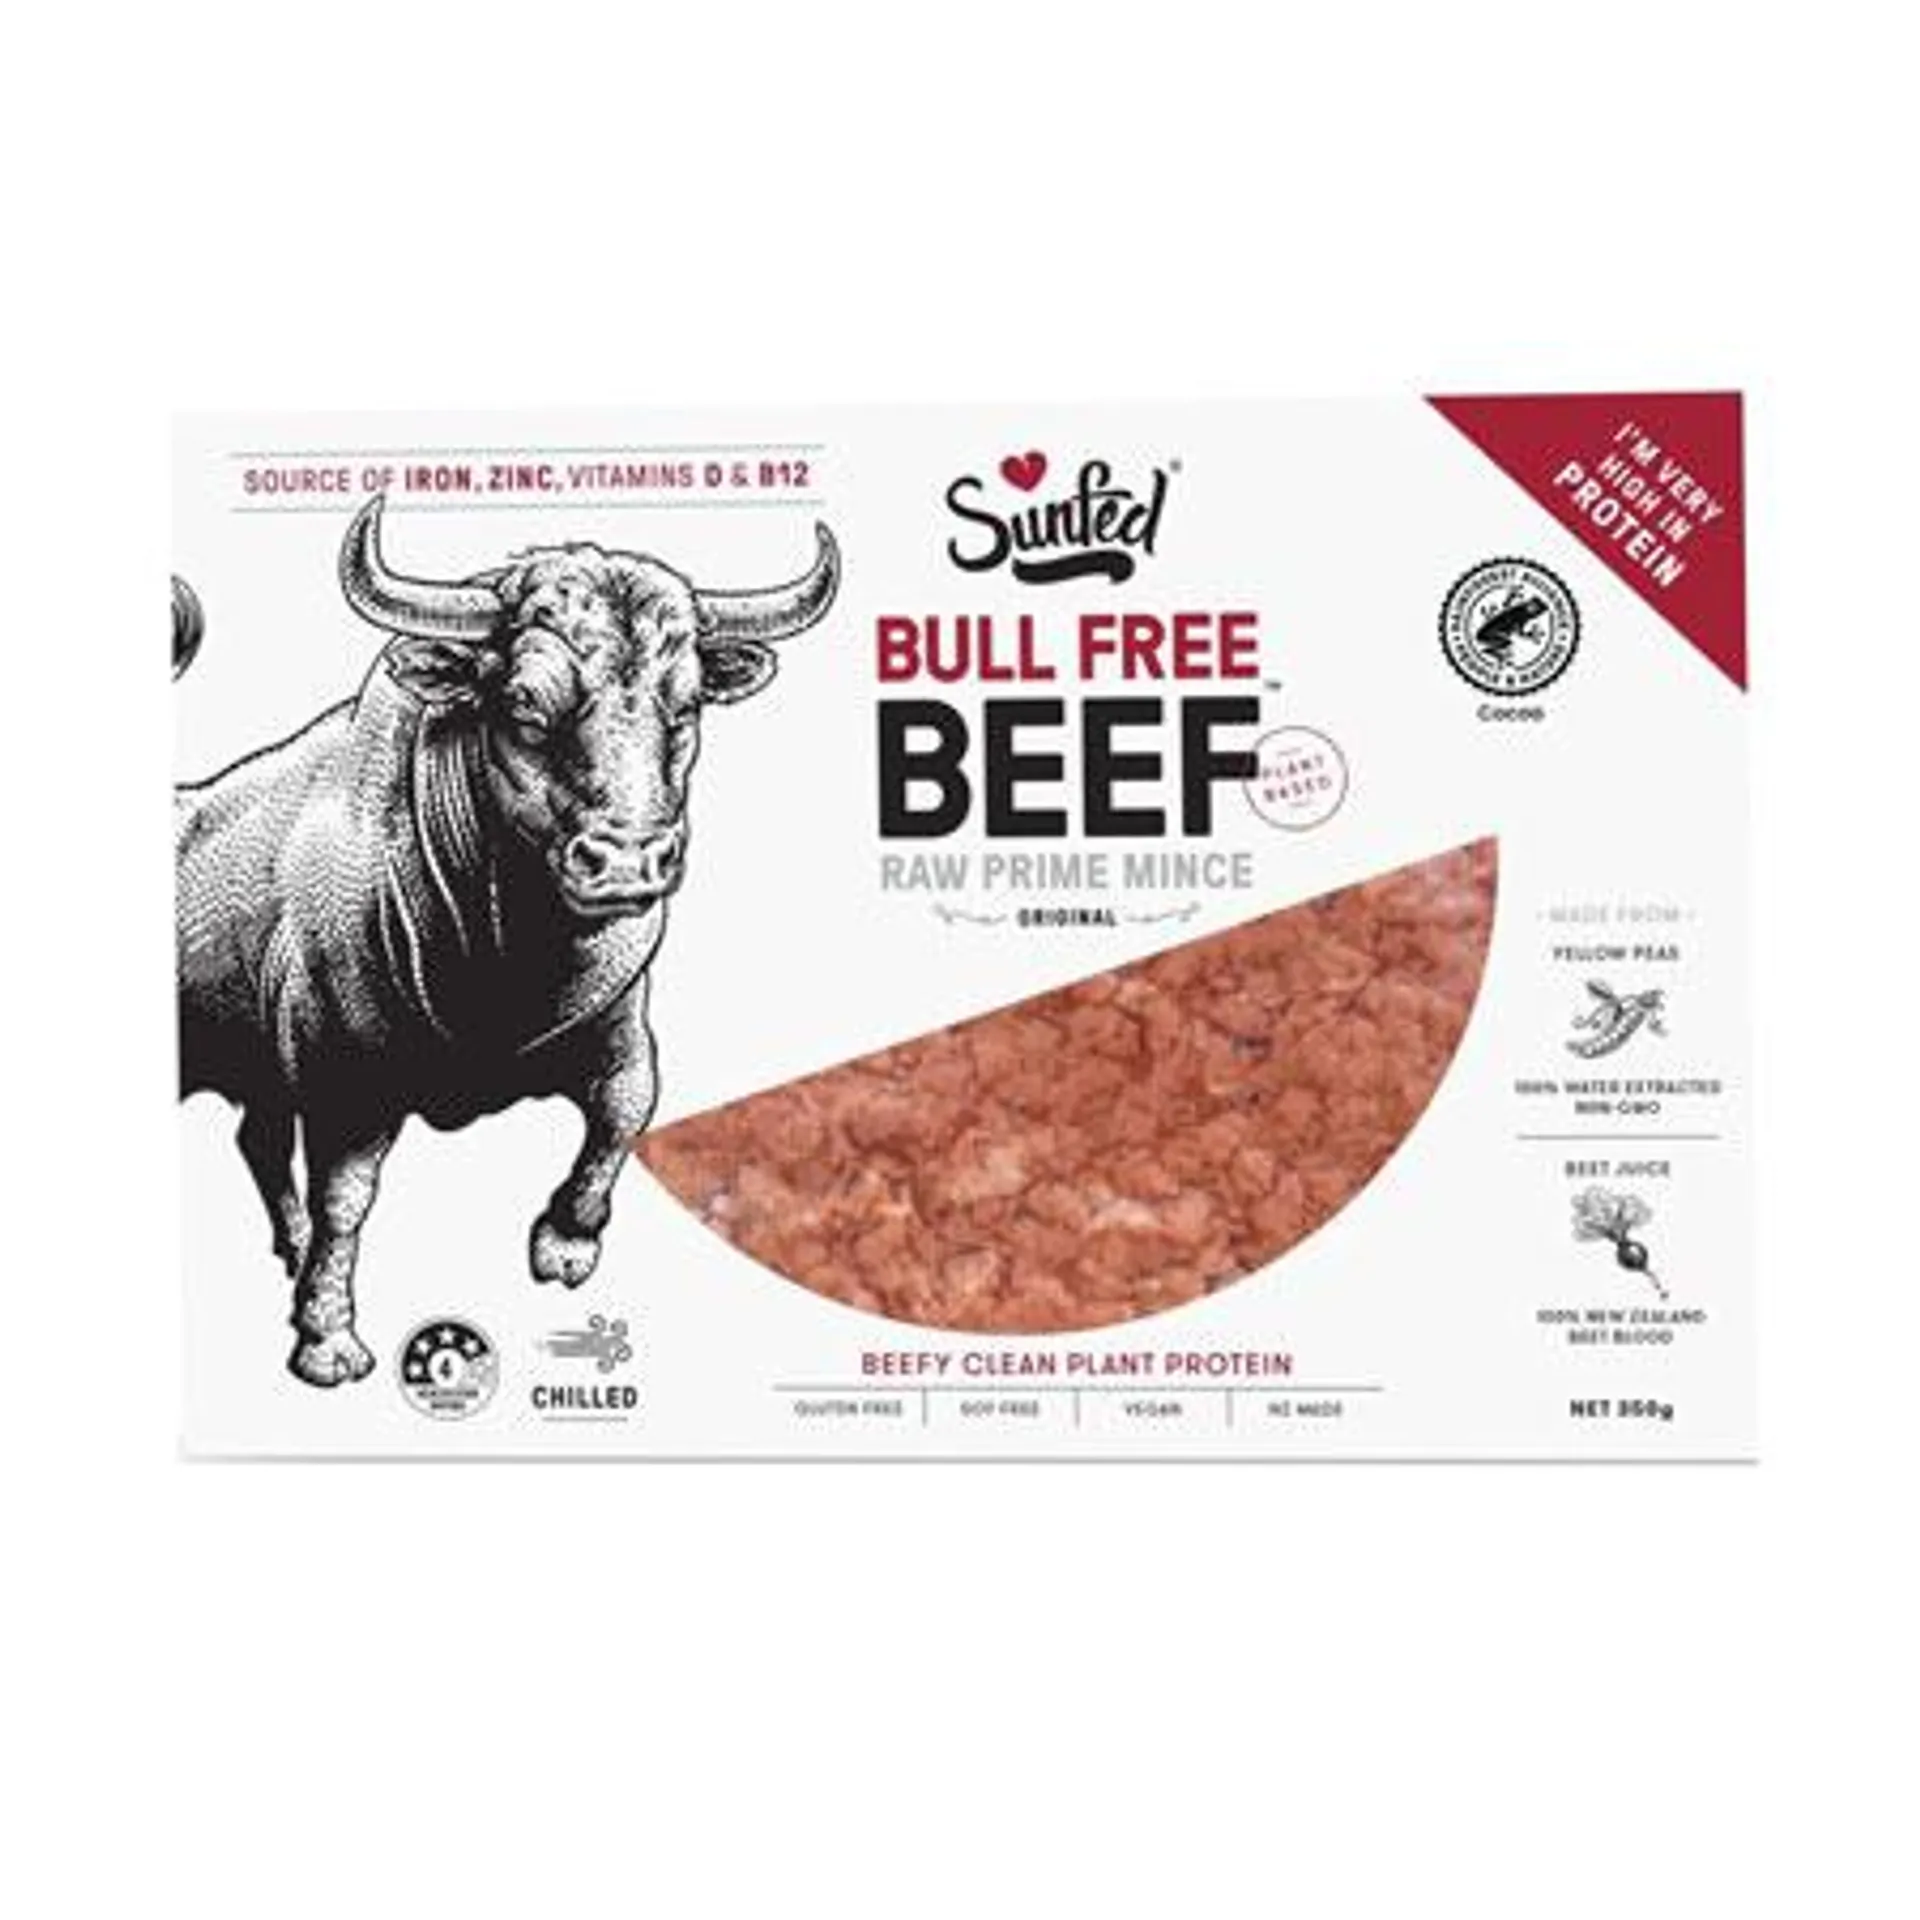 Sunfed Bull Free Beef